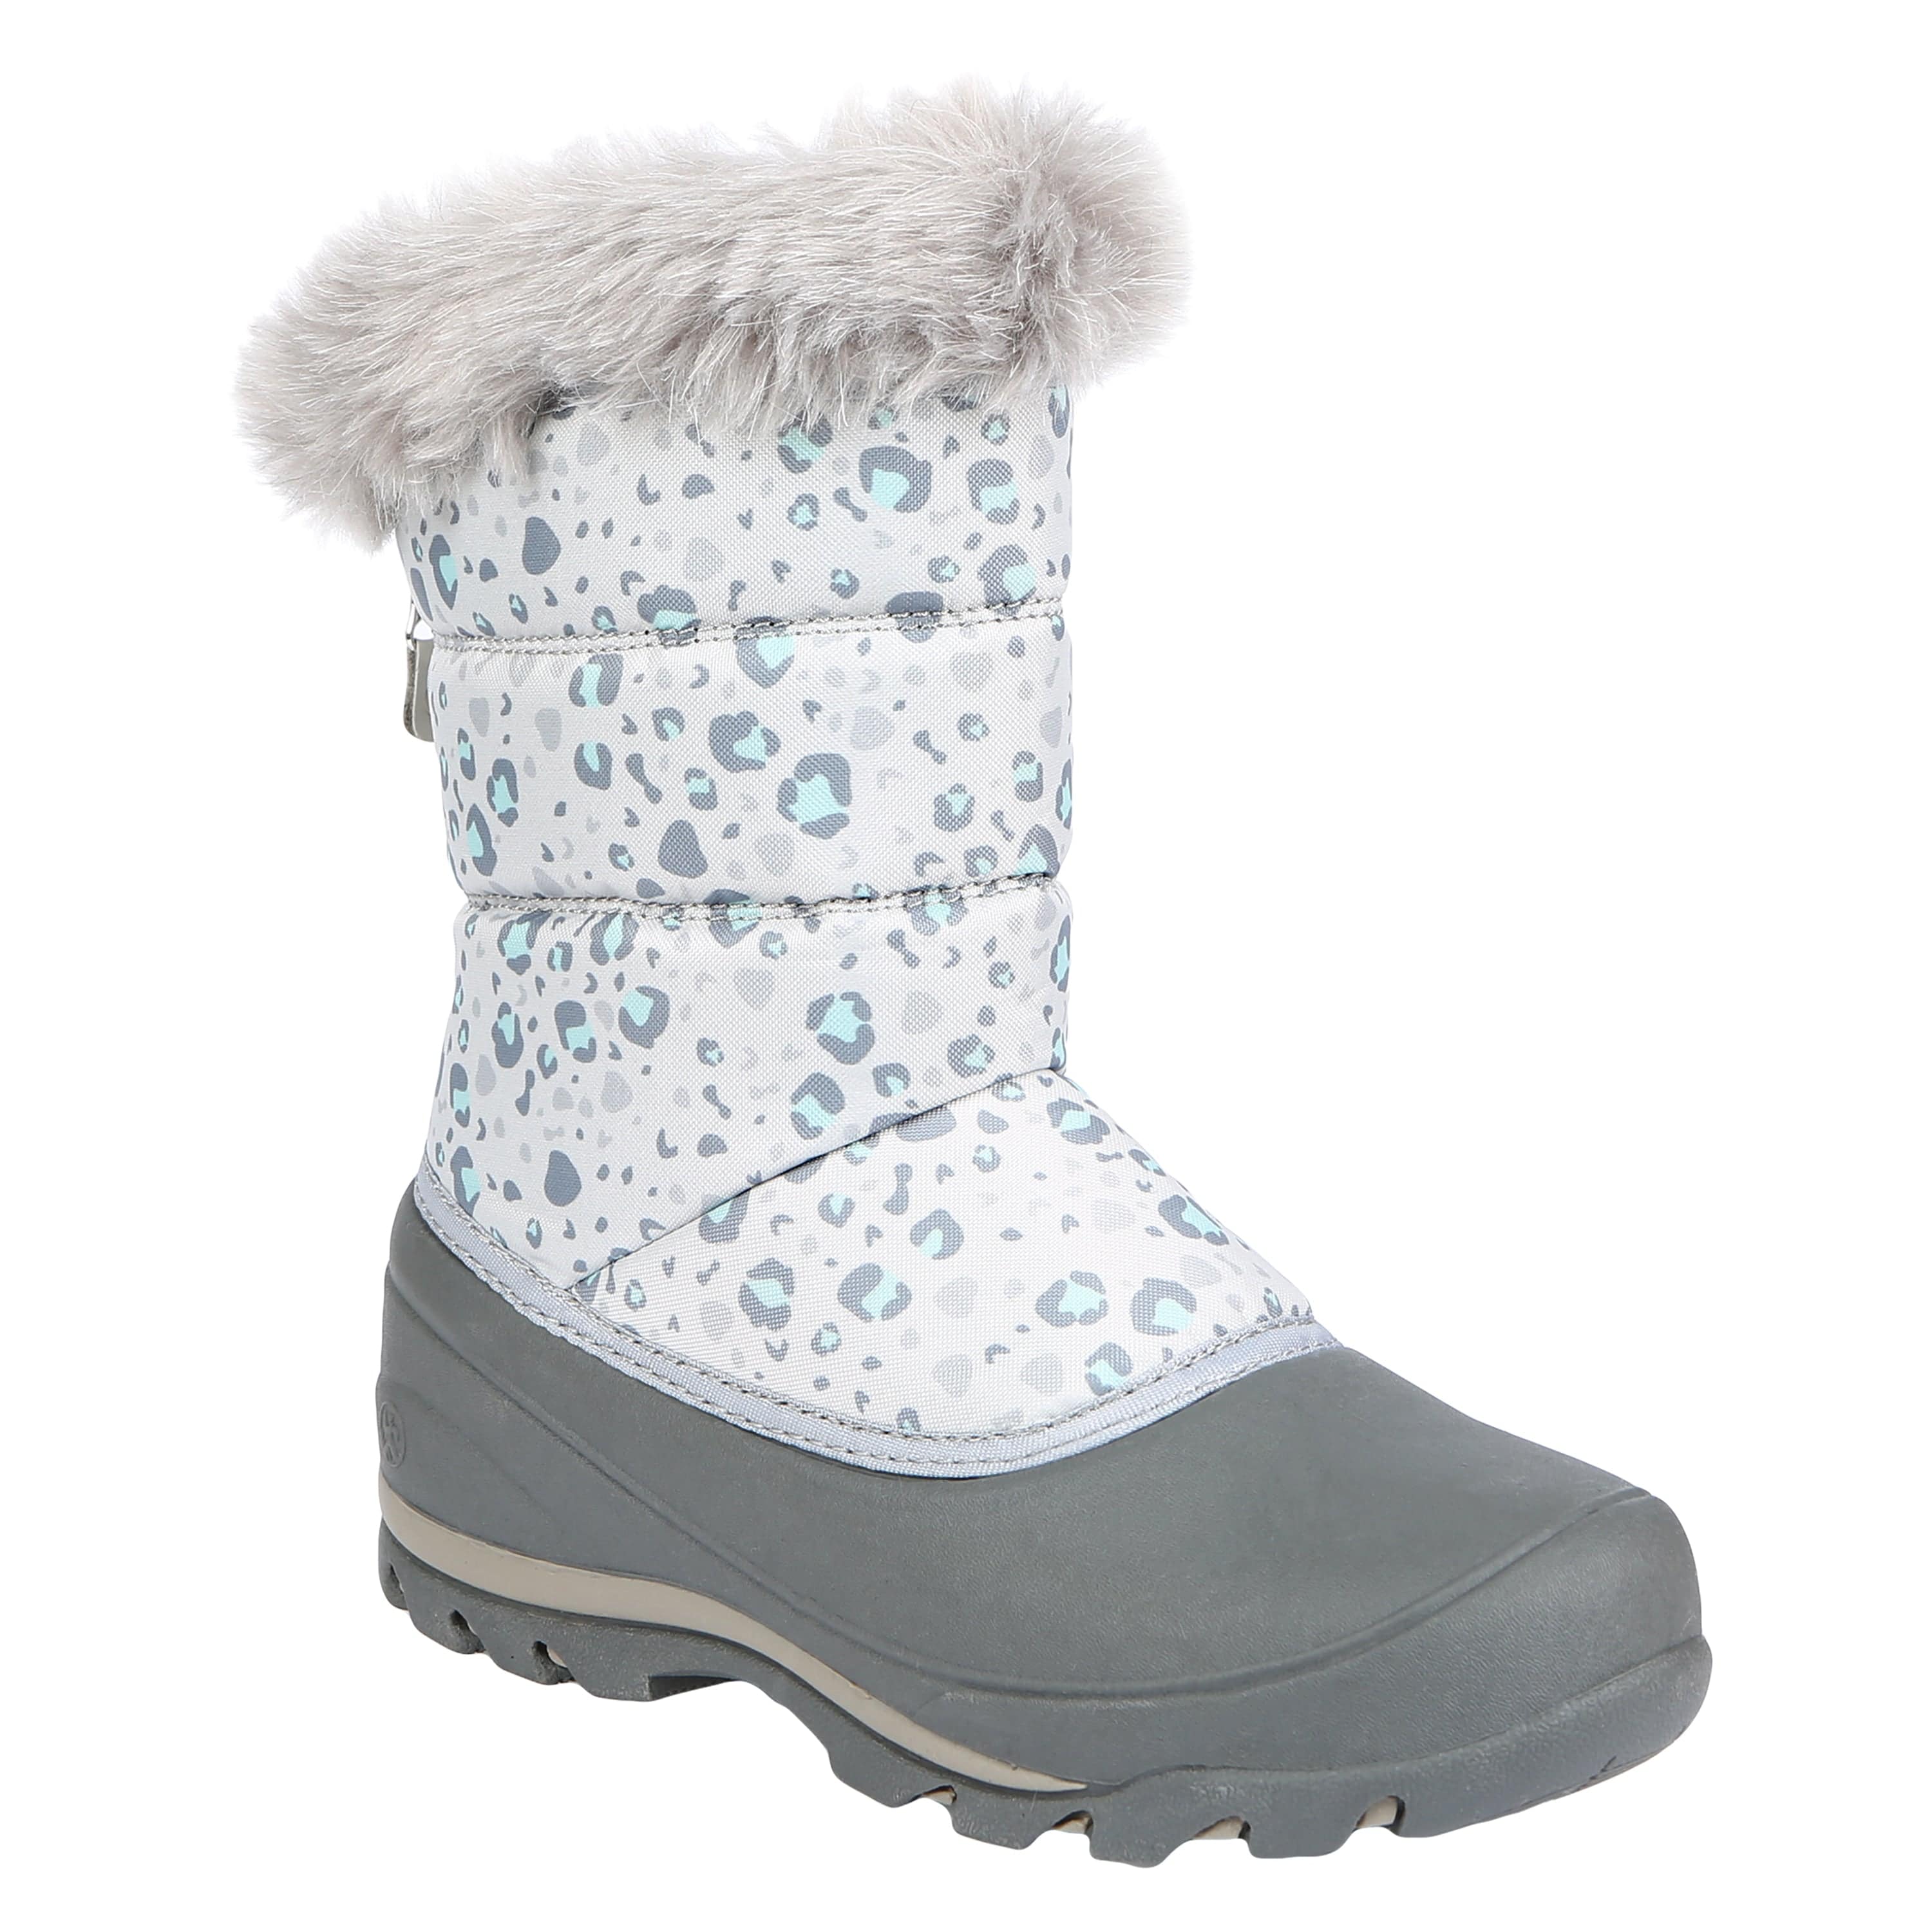 Women's Ava Snow Boots